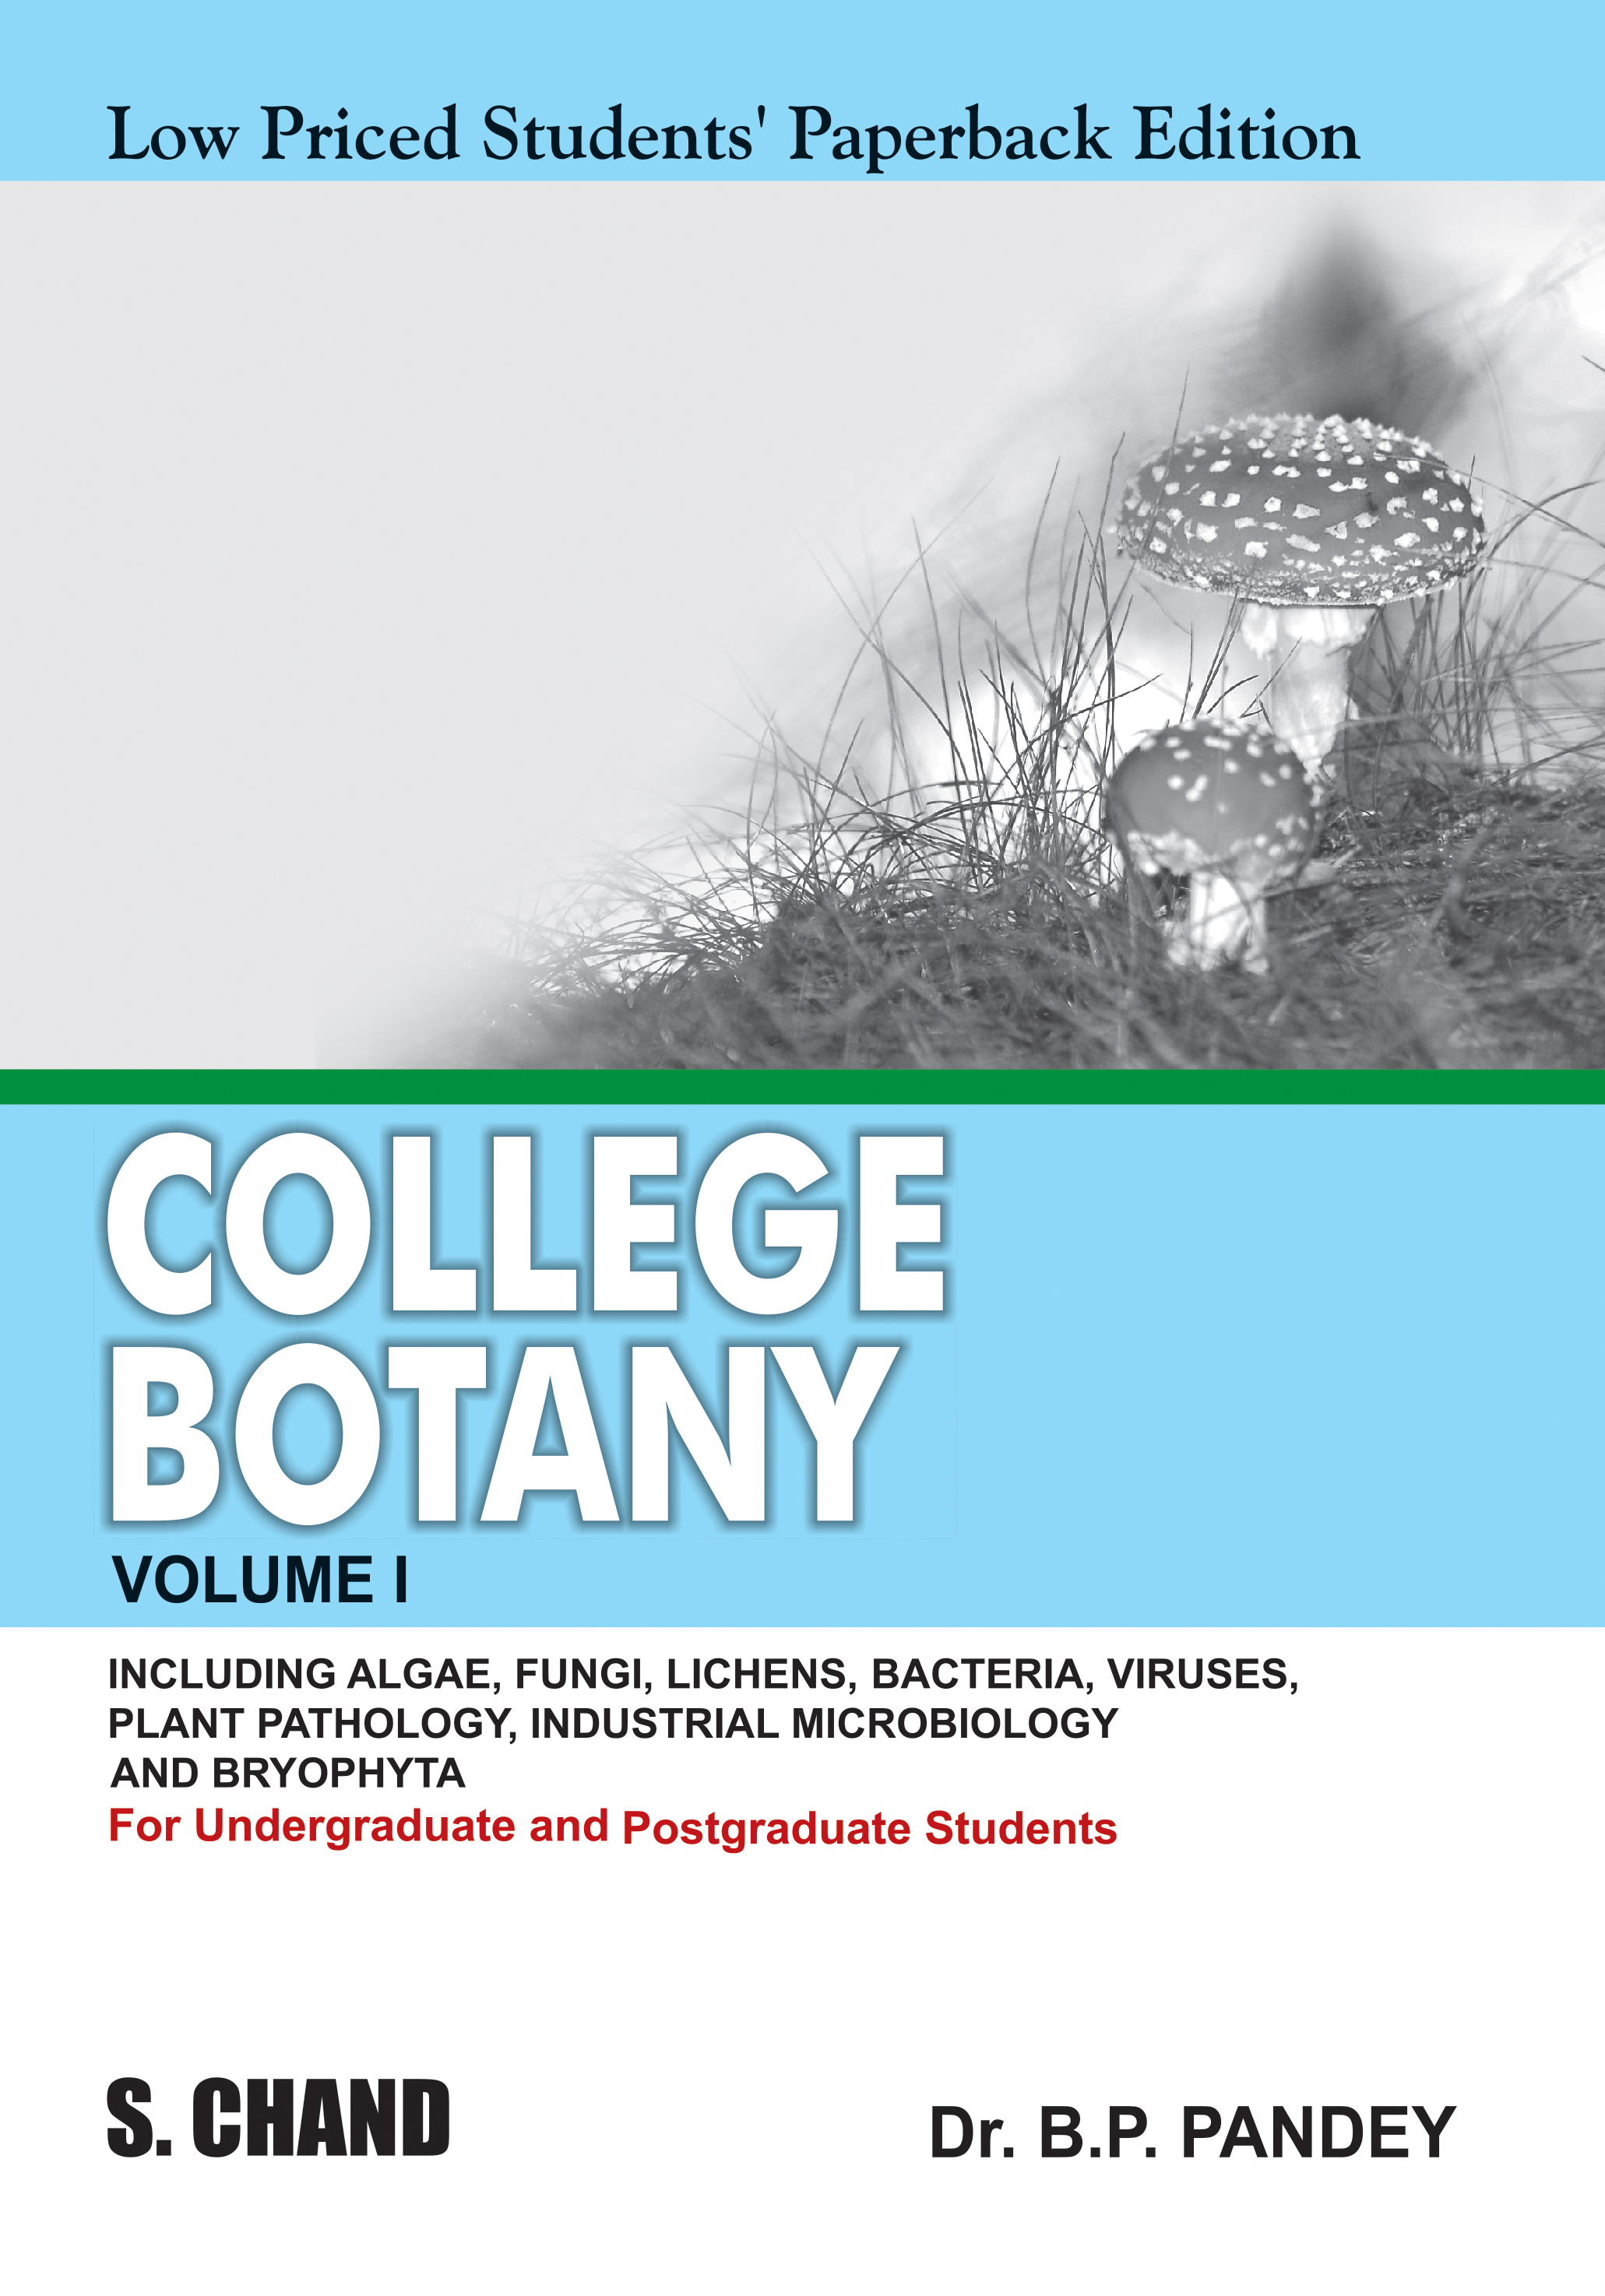 College Botany Volume I (LPSPE)